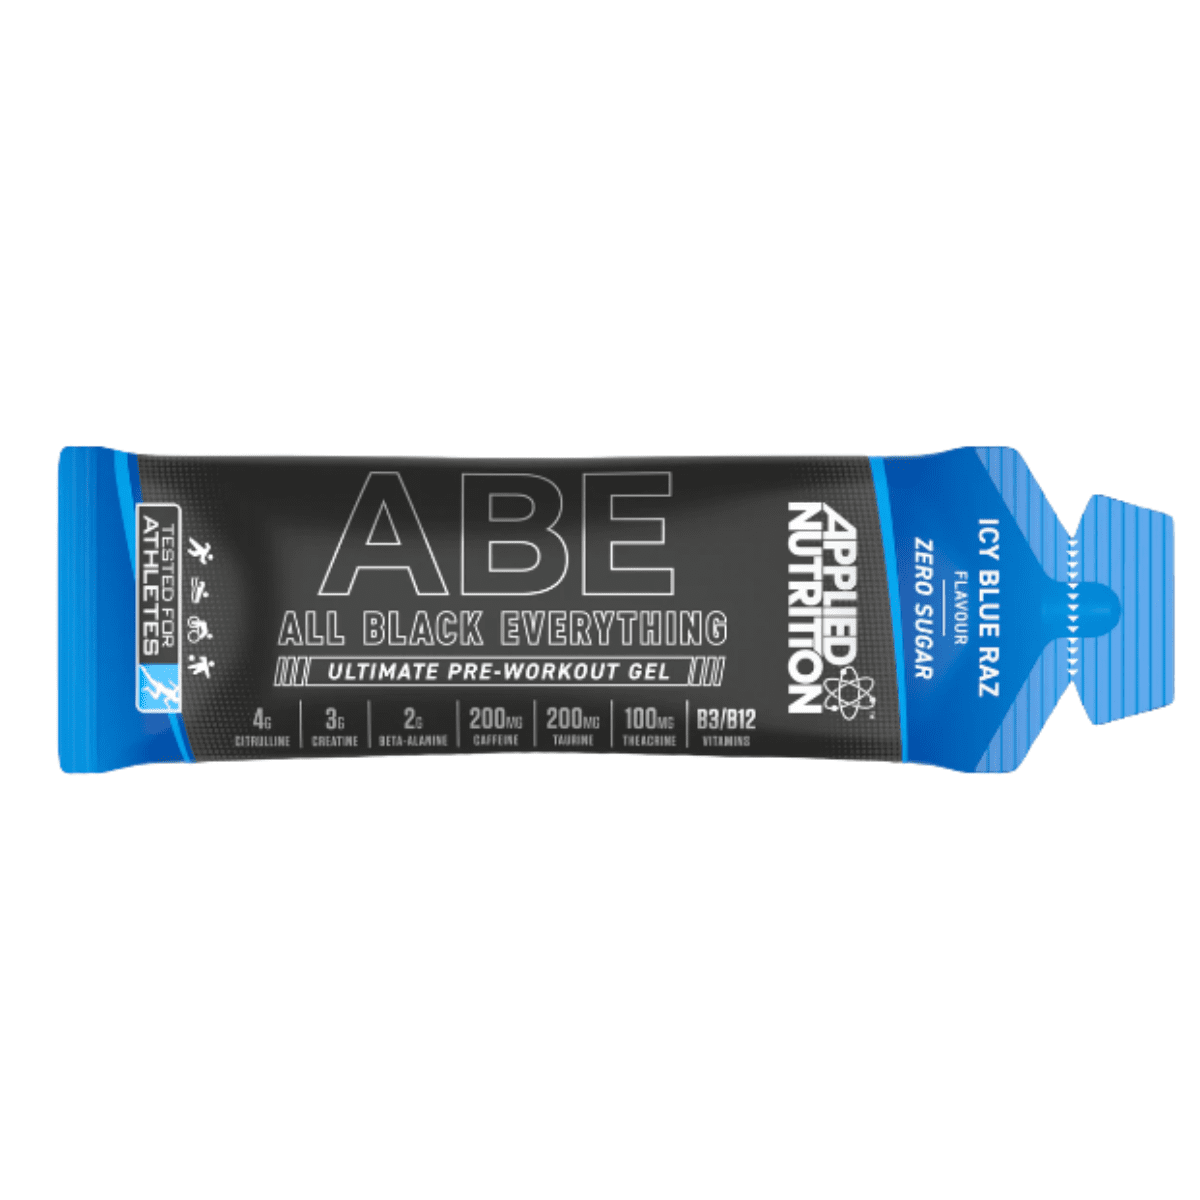 Applied ABE Pre-Workout gel 60ml - 0